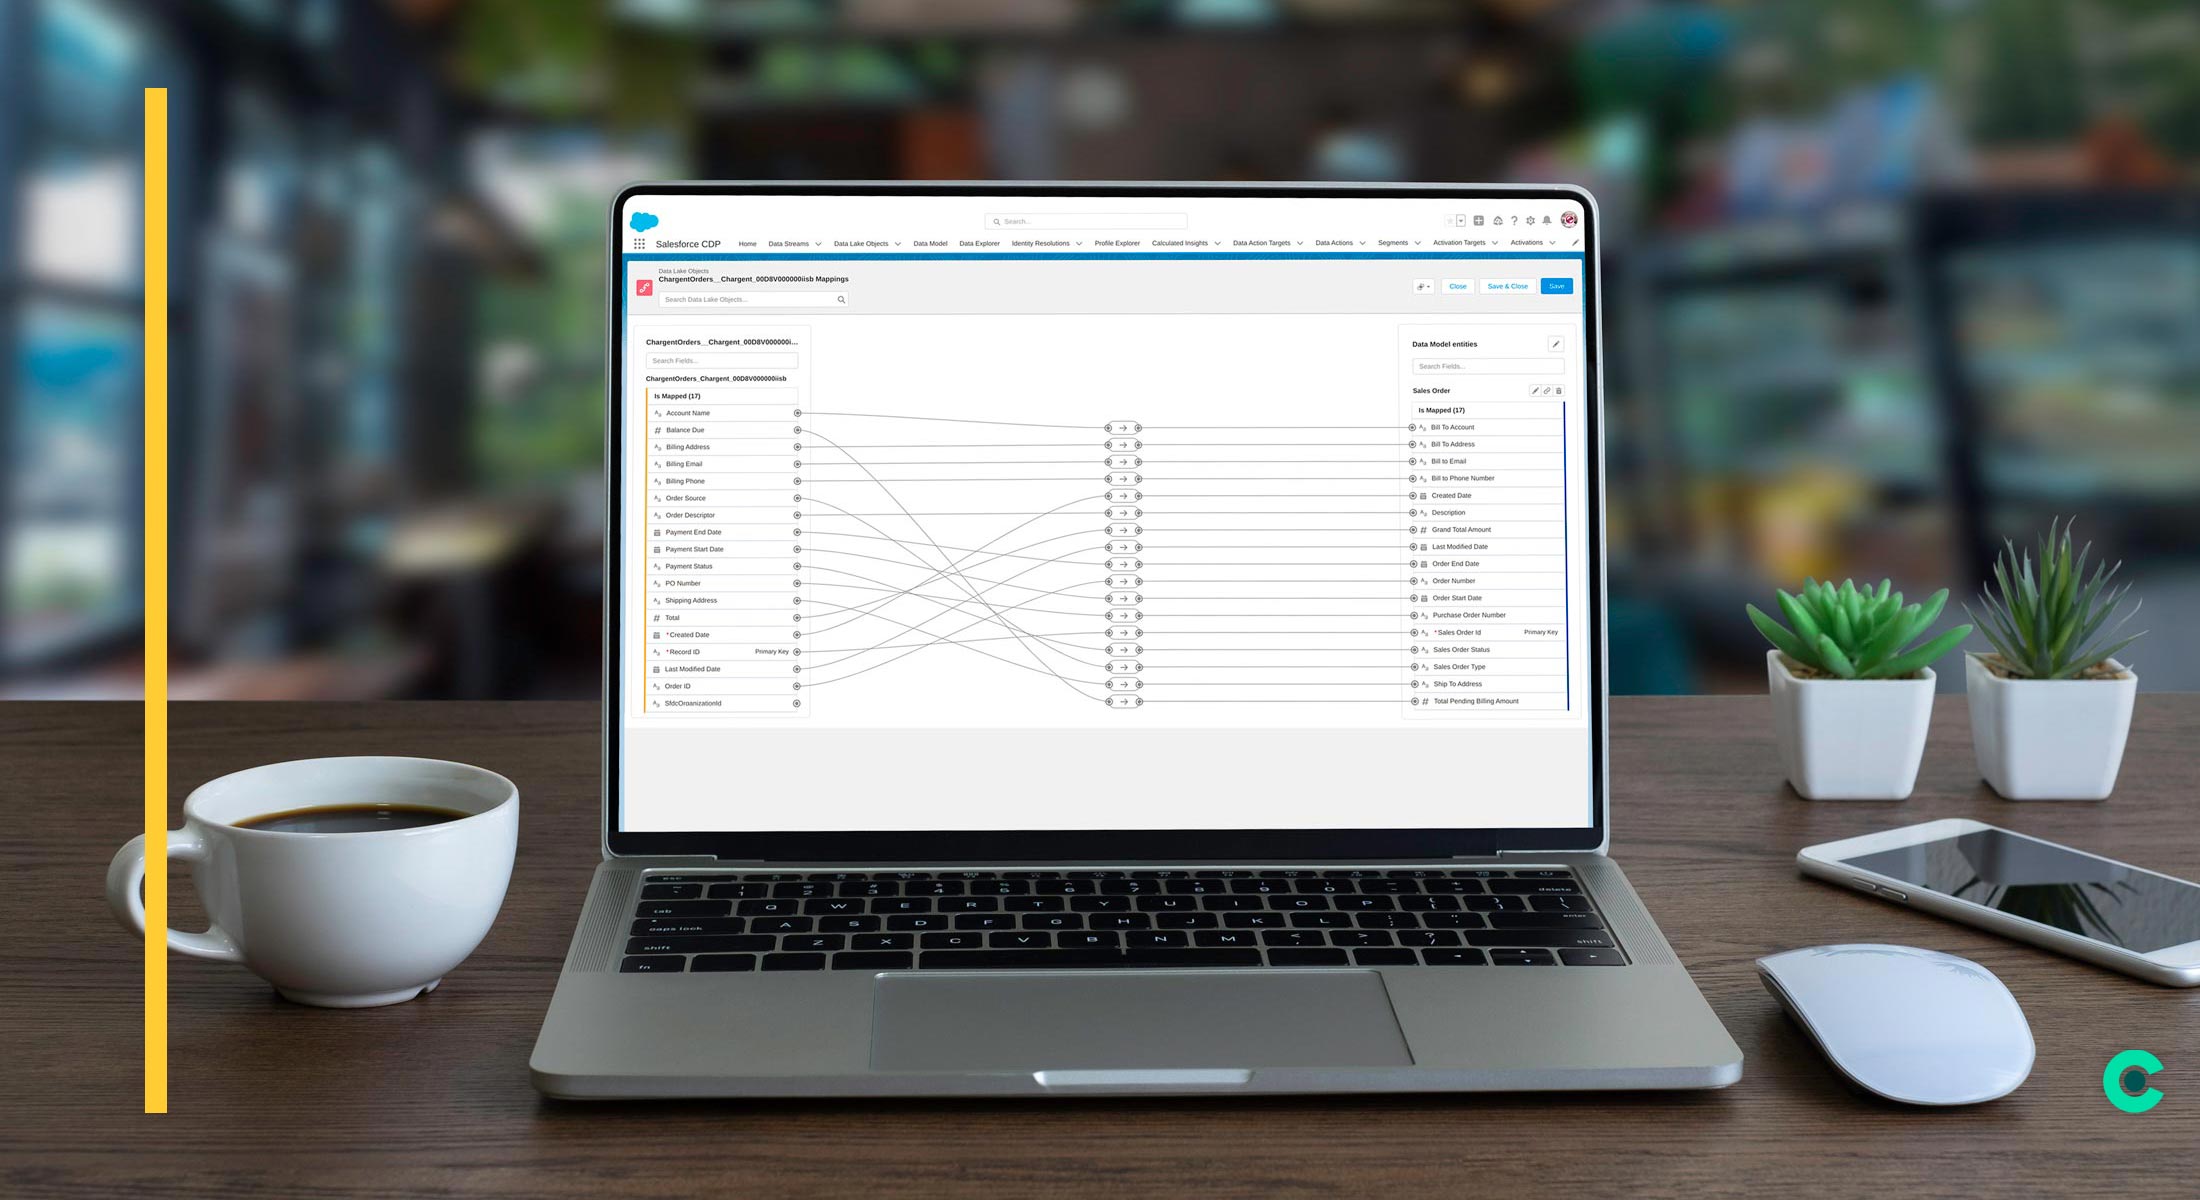 Laptop screen showing data mapping in Salesforce Customer Data Platform